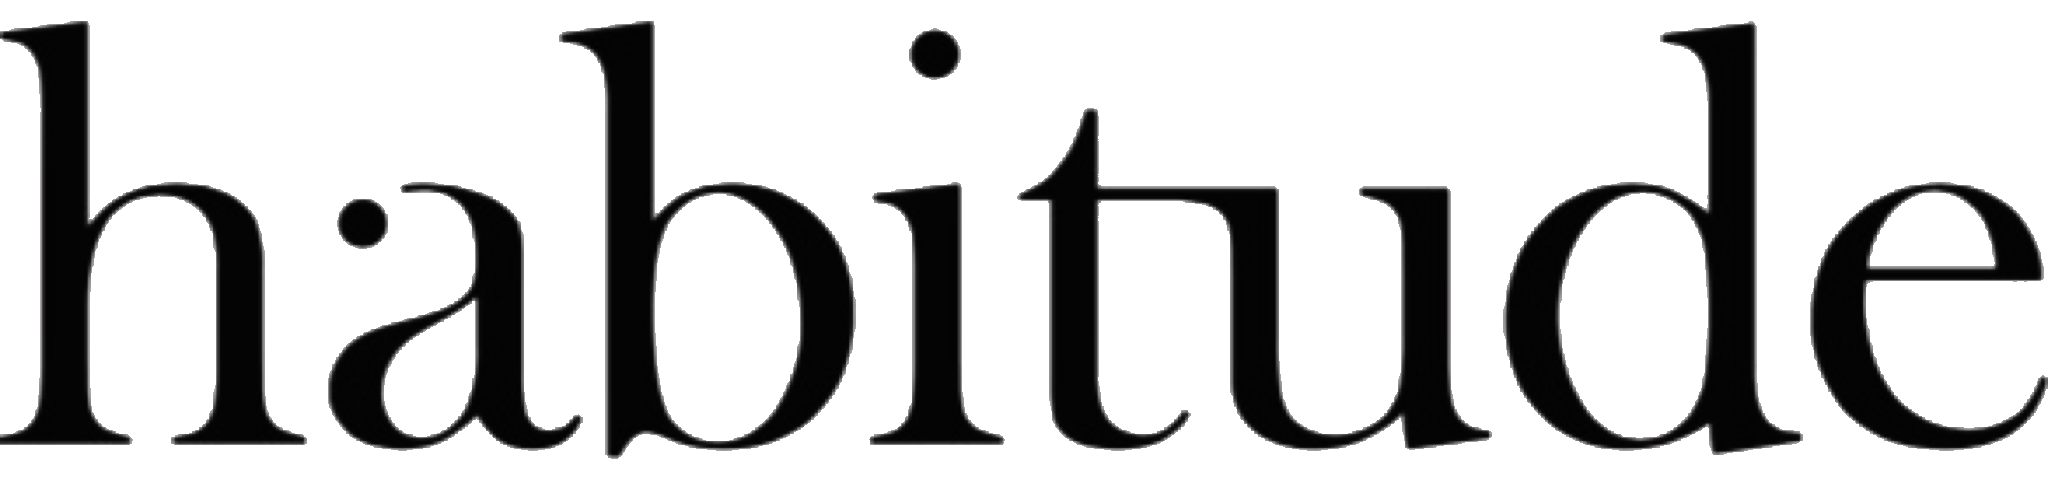 habitude design logo